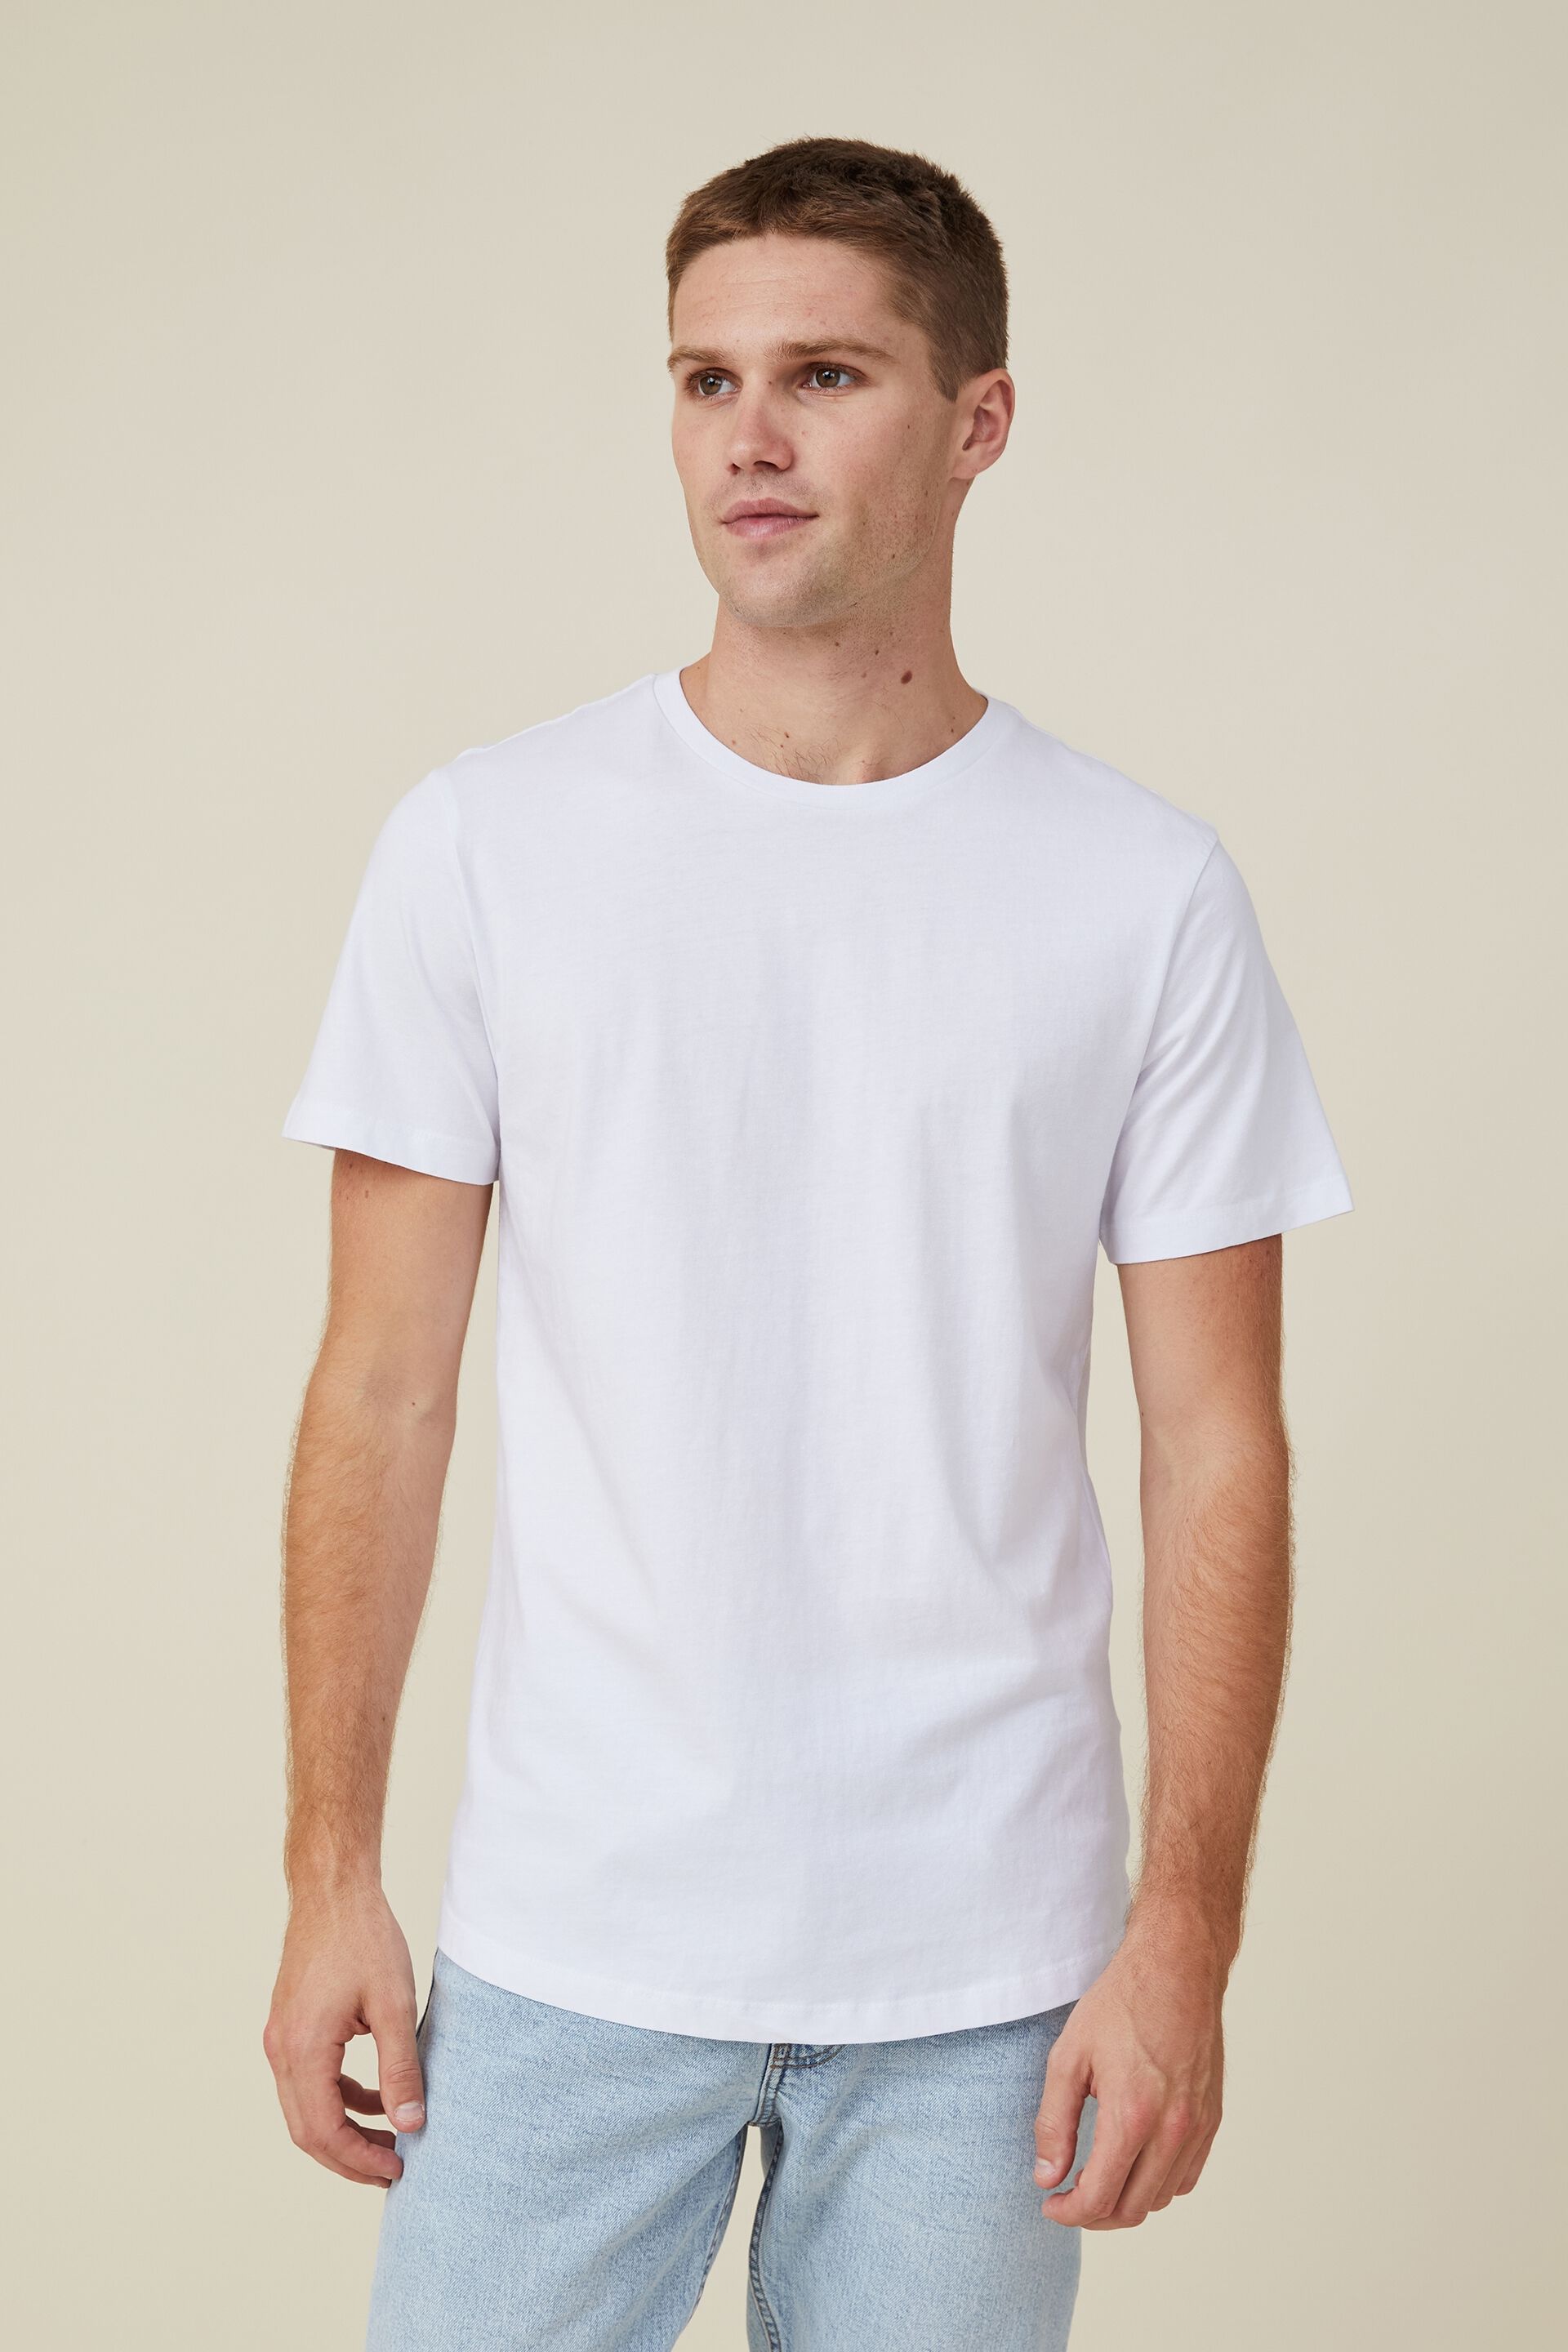 Beige/Black M H&M T-shirt WOMEN FASHION Shirts & T-shirts Sailor discount 92% 